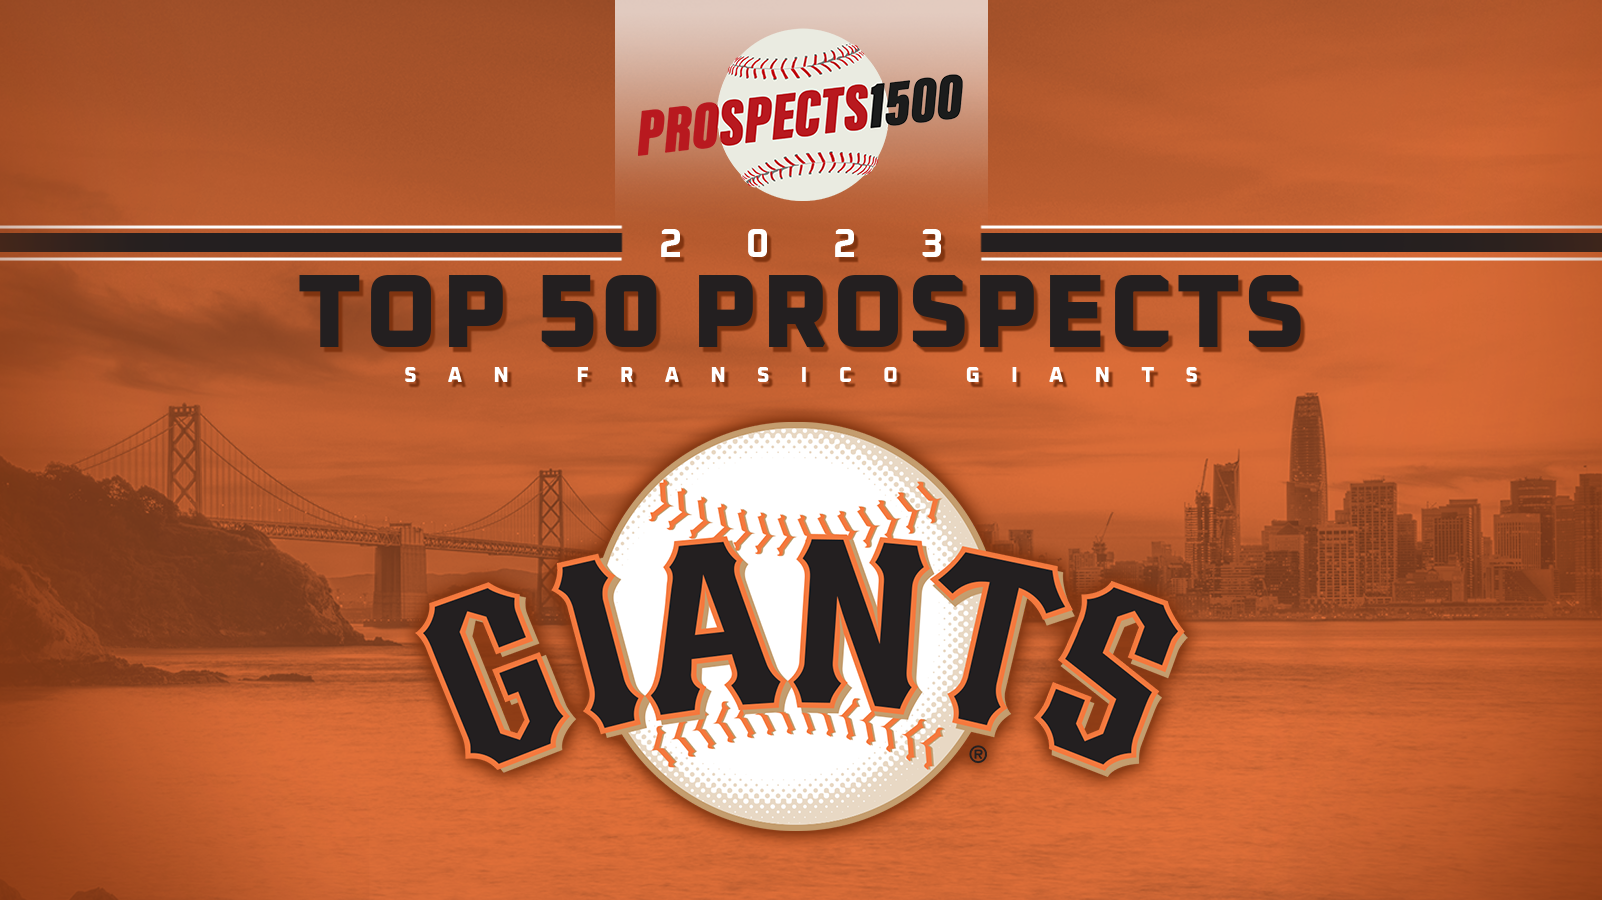 www.prospects1500.com